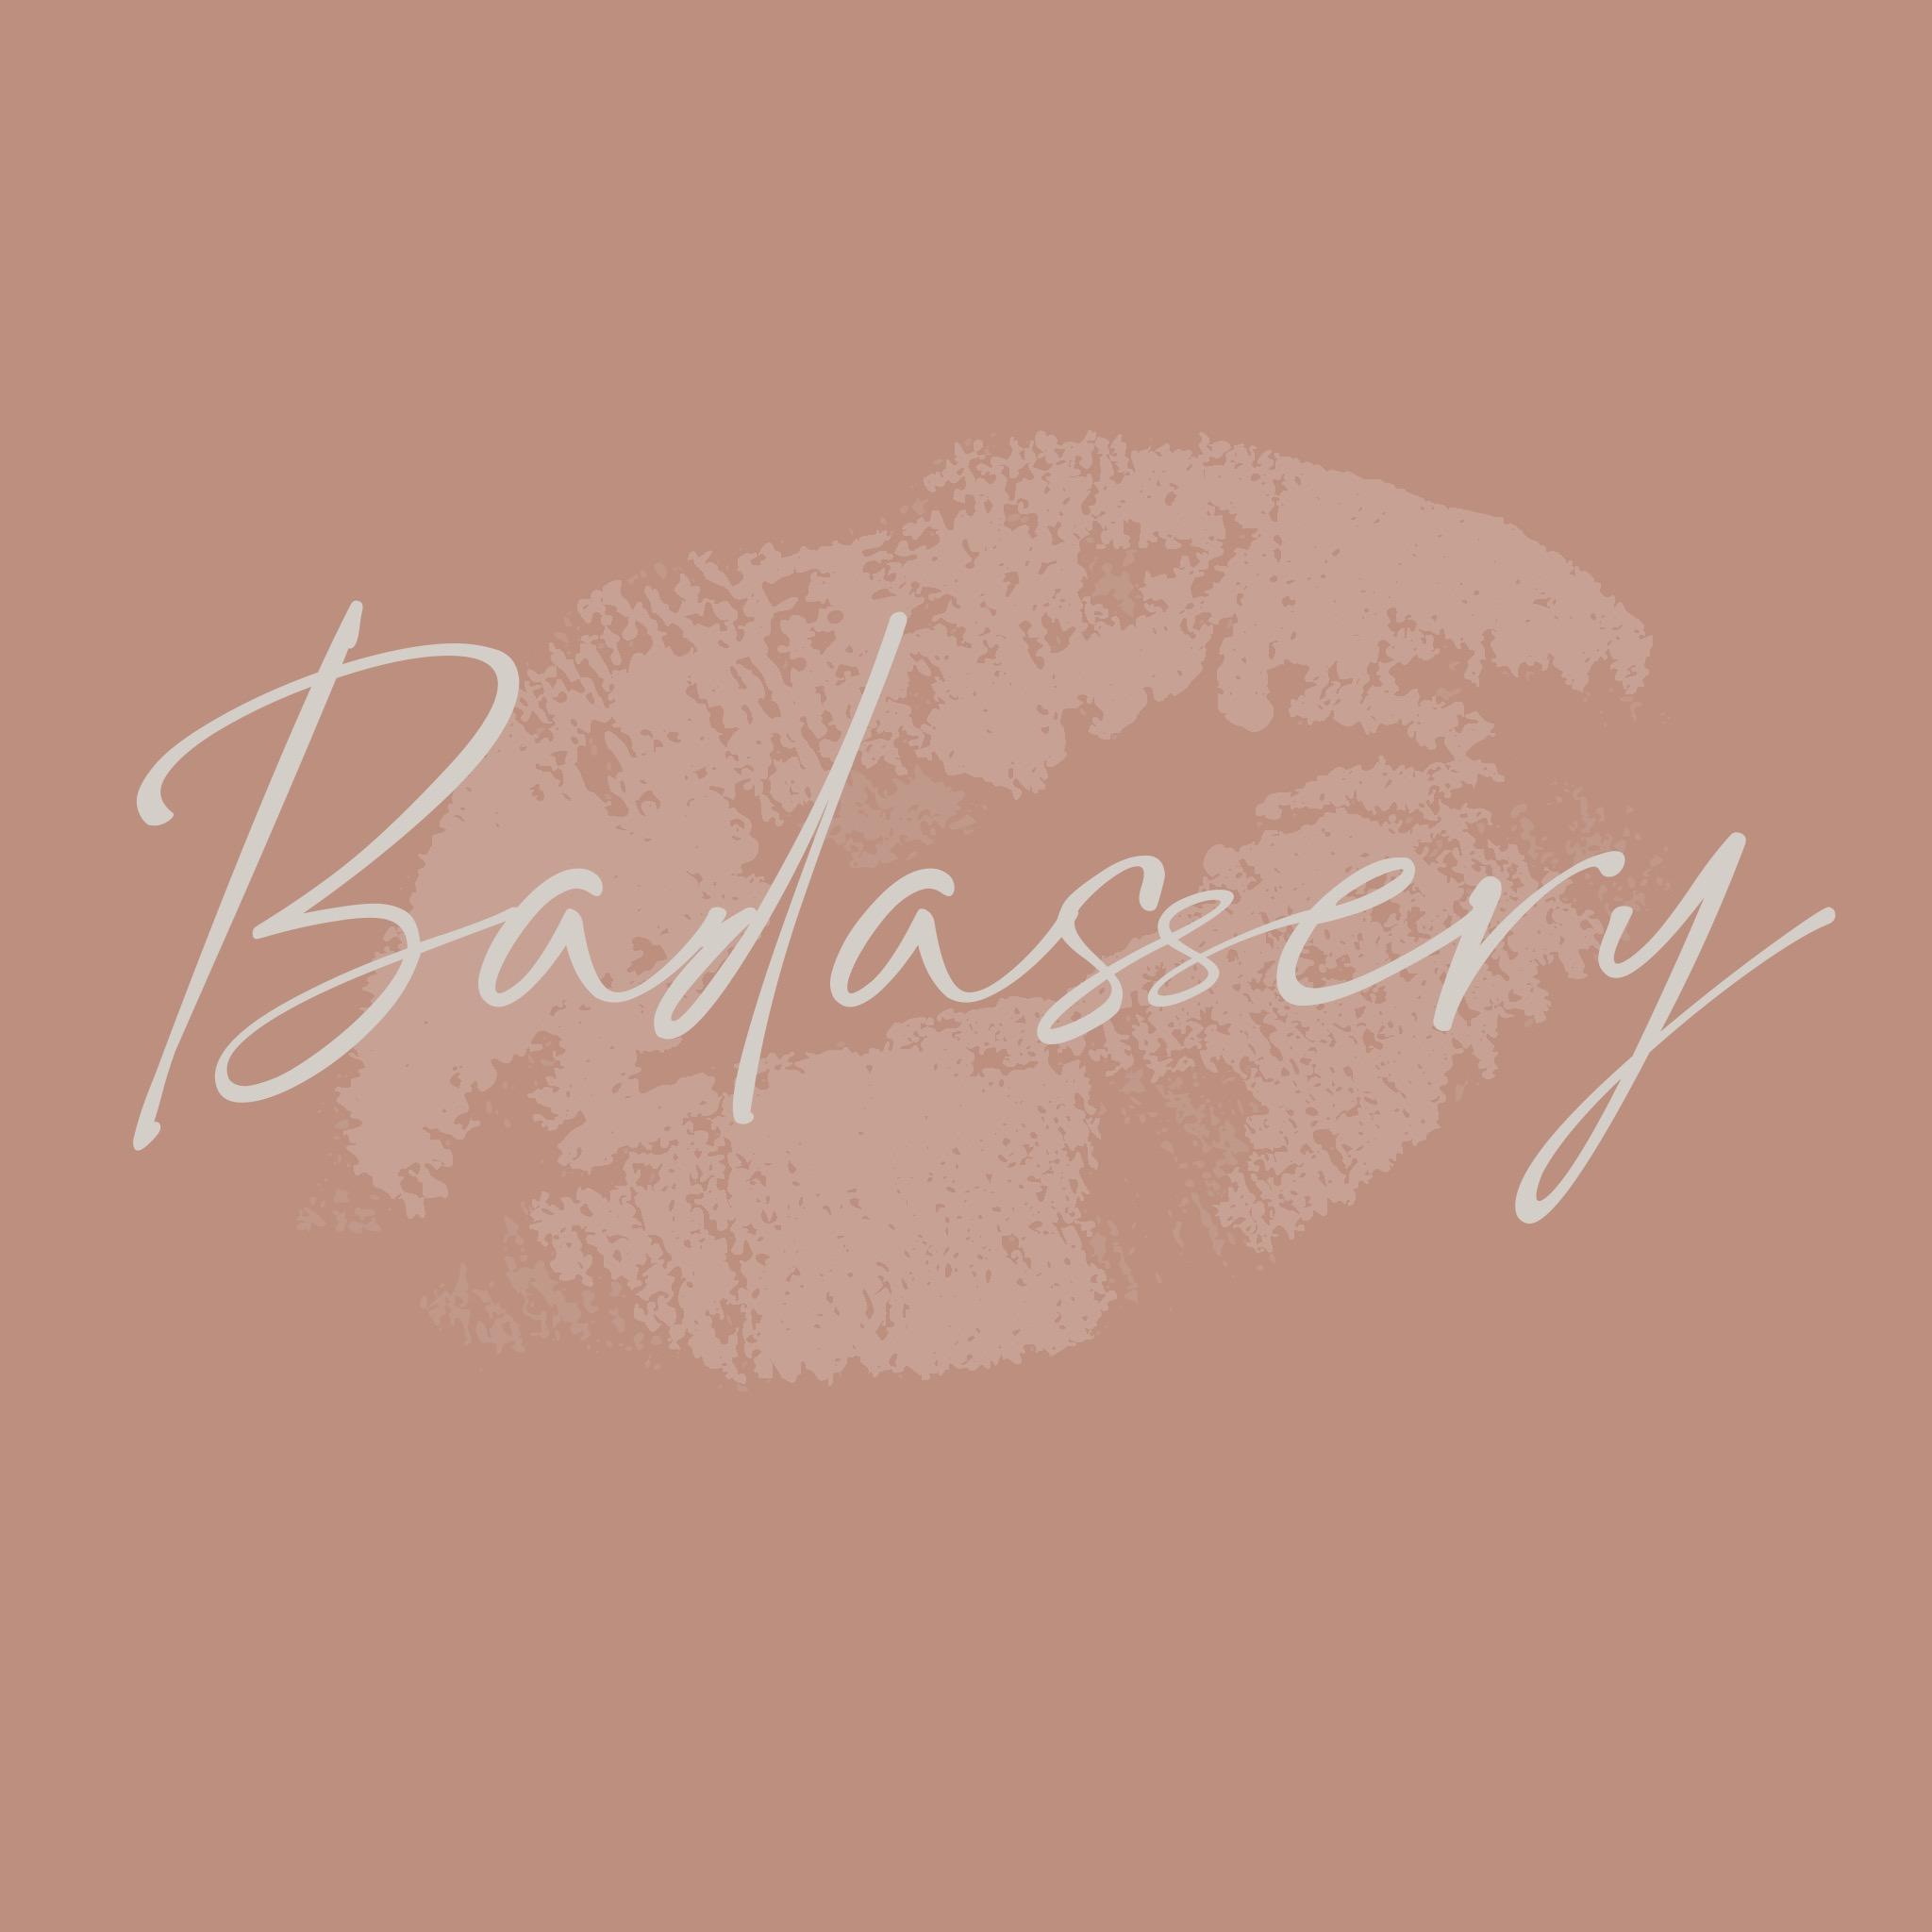 Badassery